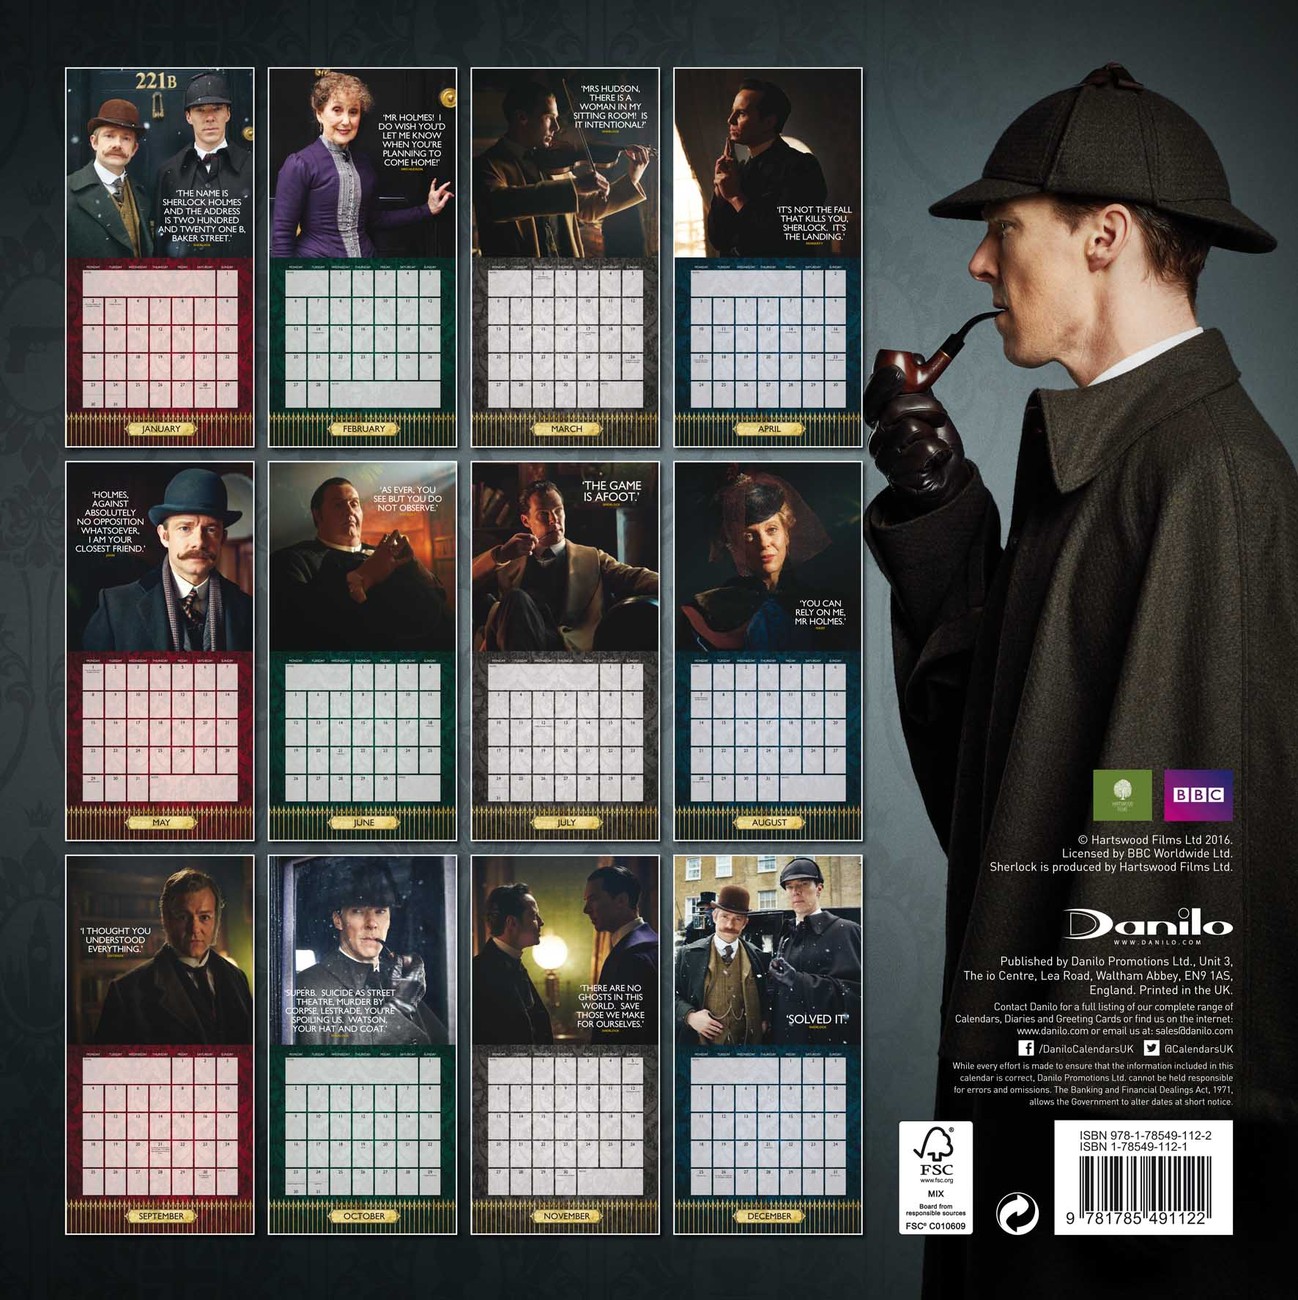 Sherlock Calendarios de pared 2017 Consíguelos en Posters.es